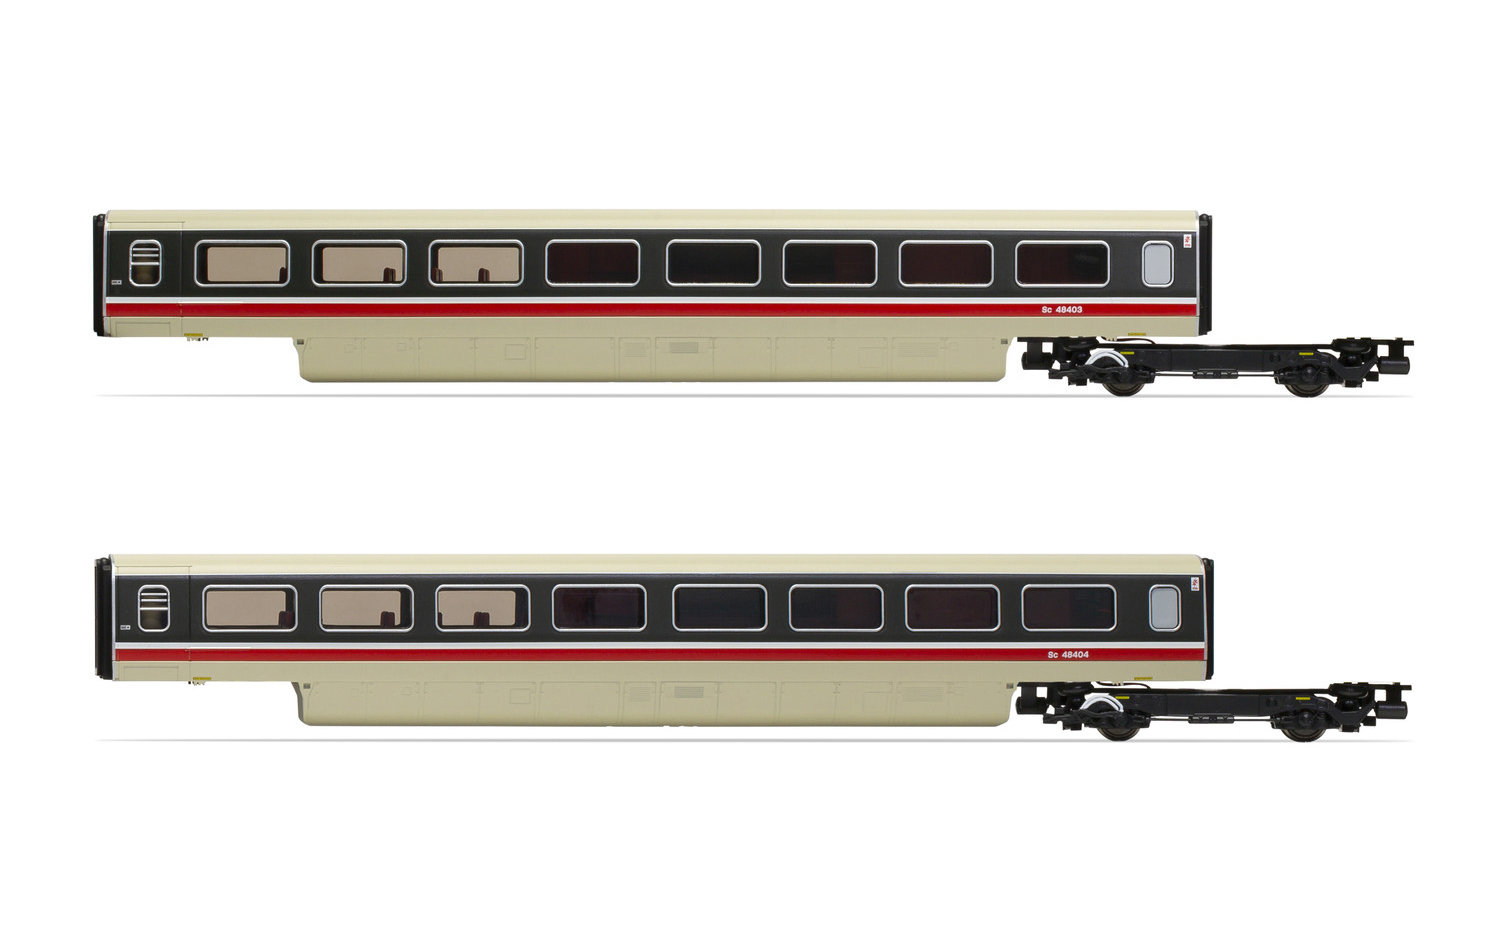 R40012 Hornby BR, Class 370 Advanced Passenger Train 2-car